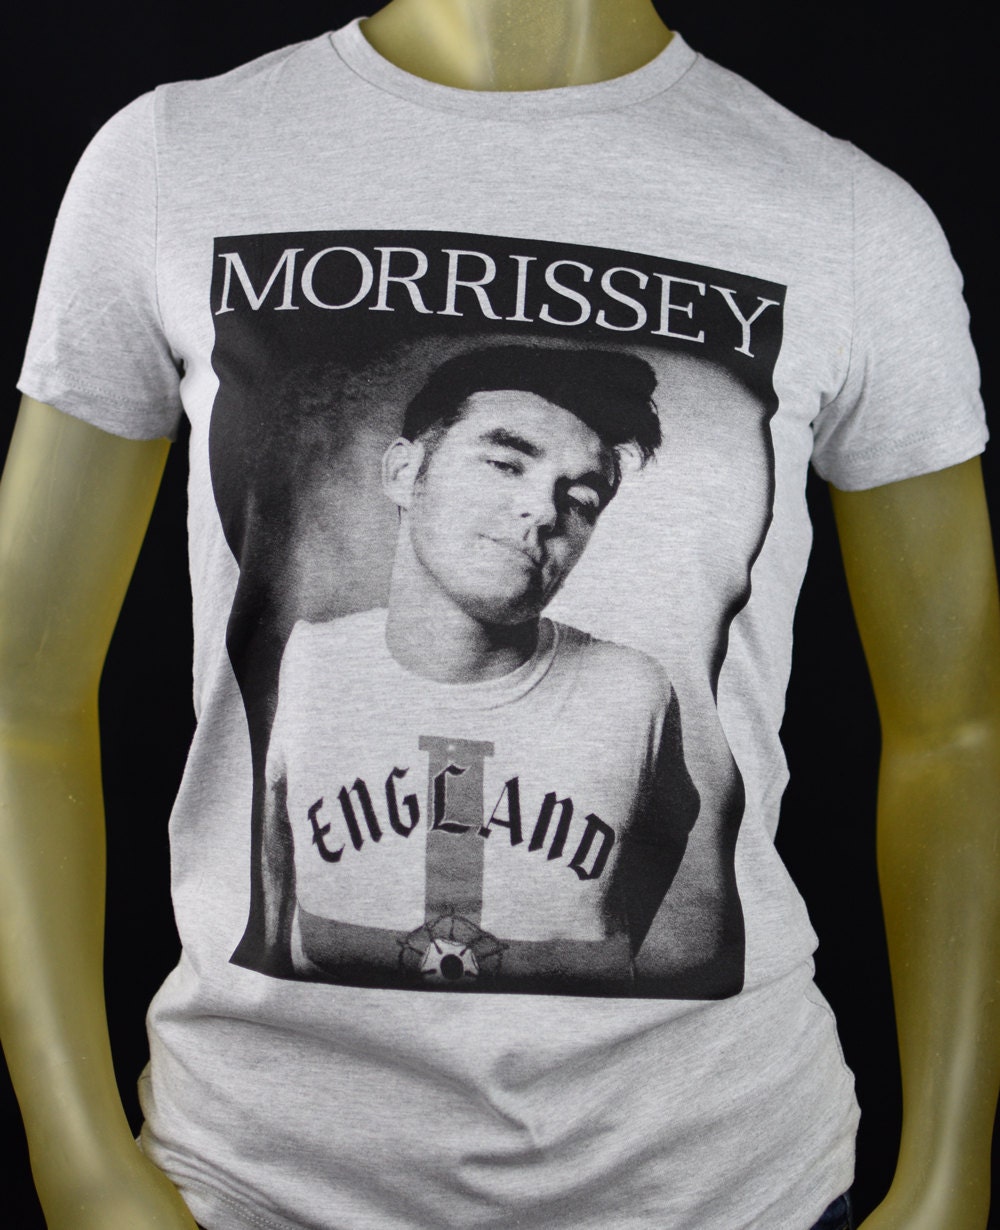 morrissey tour 2023 t shirt